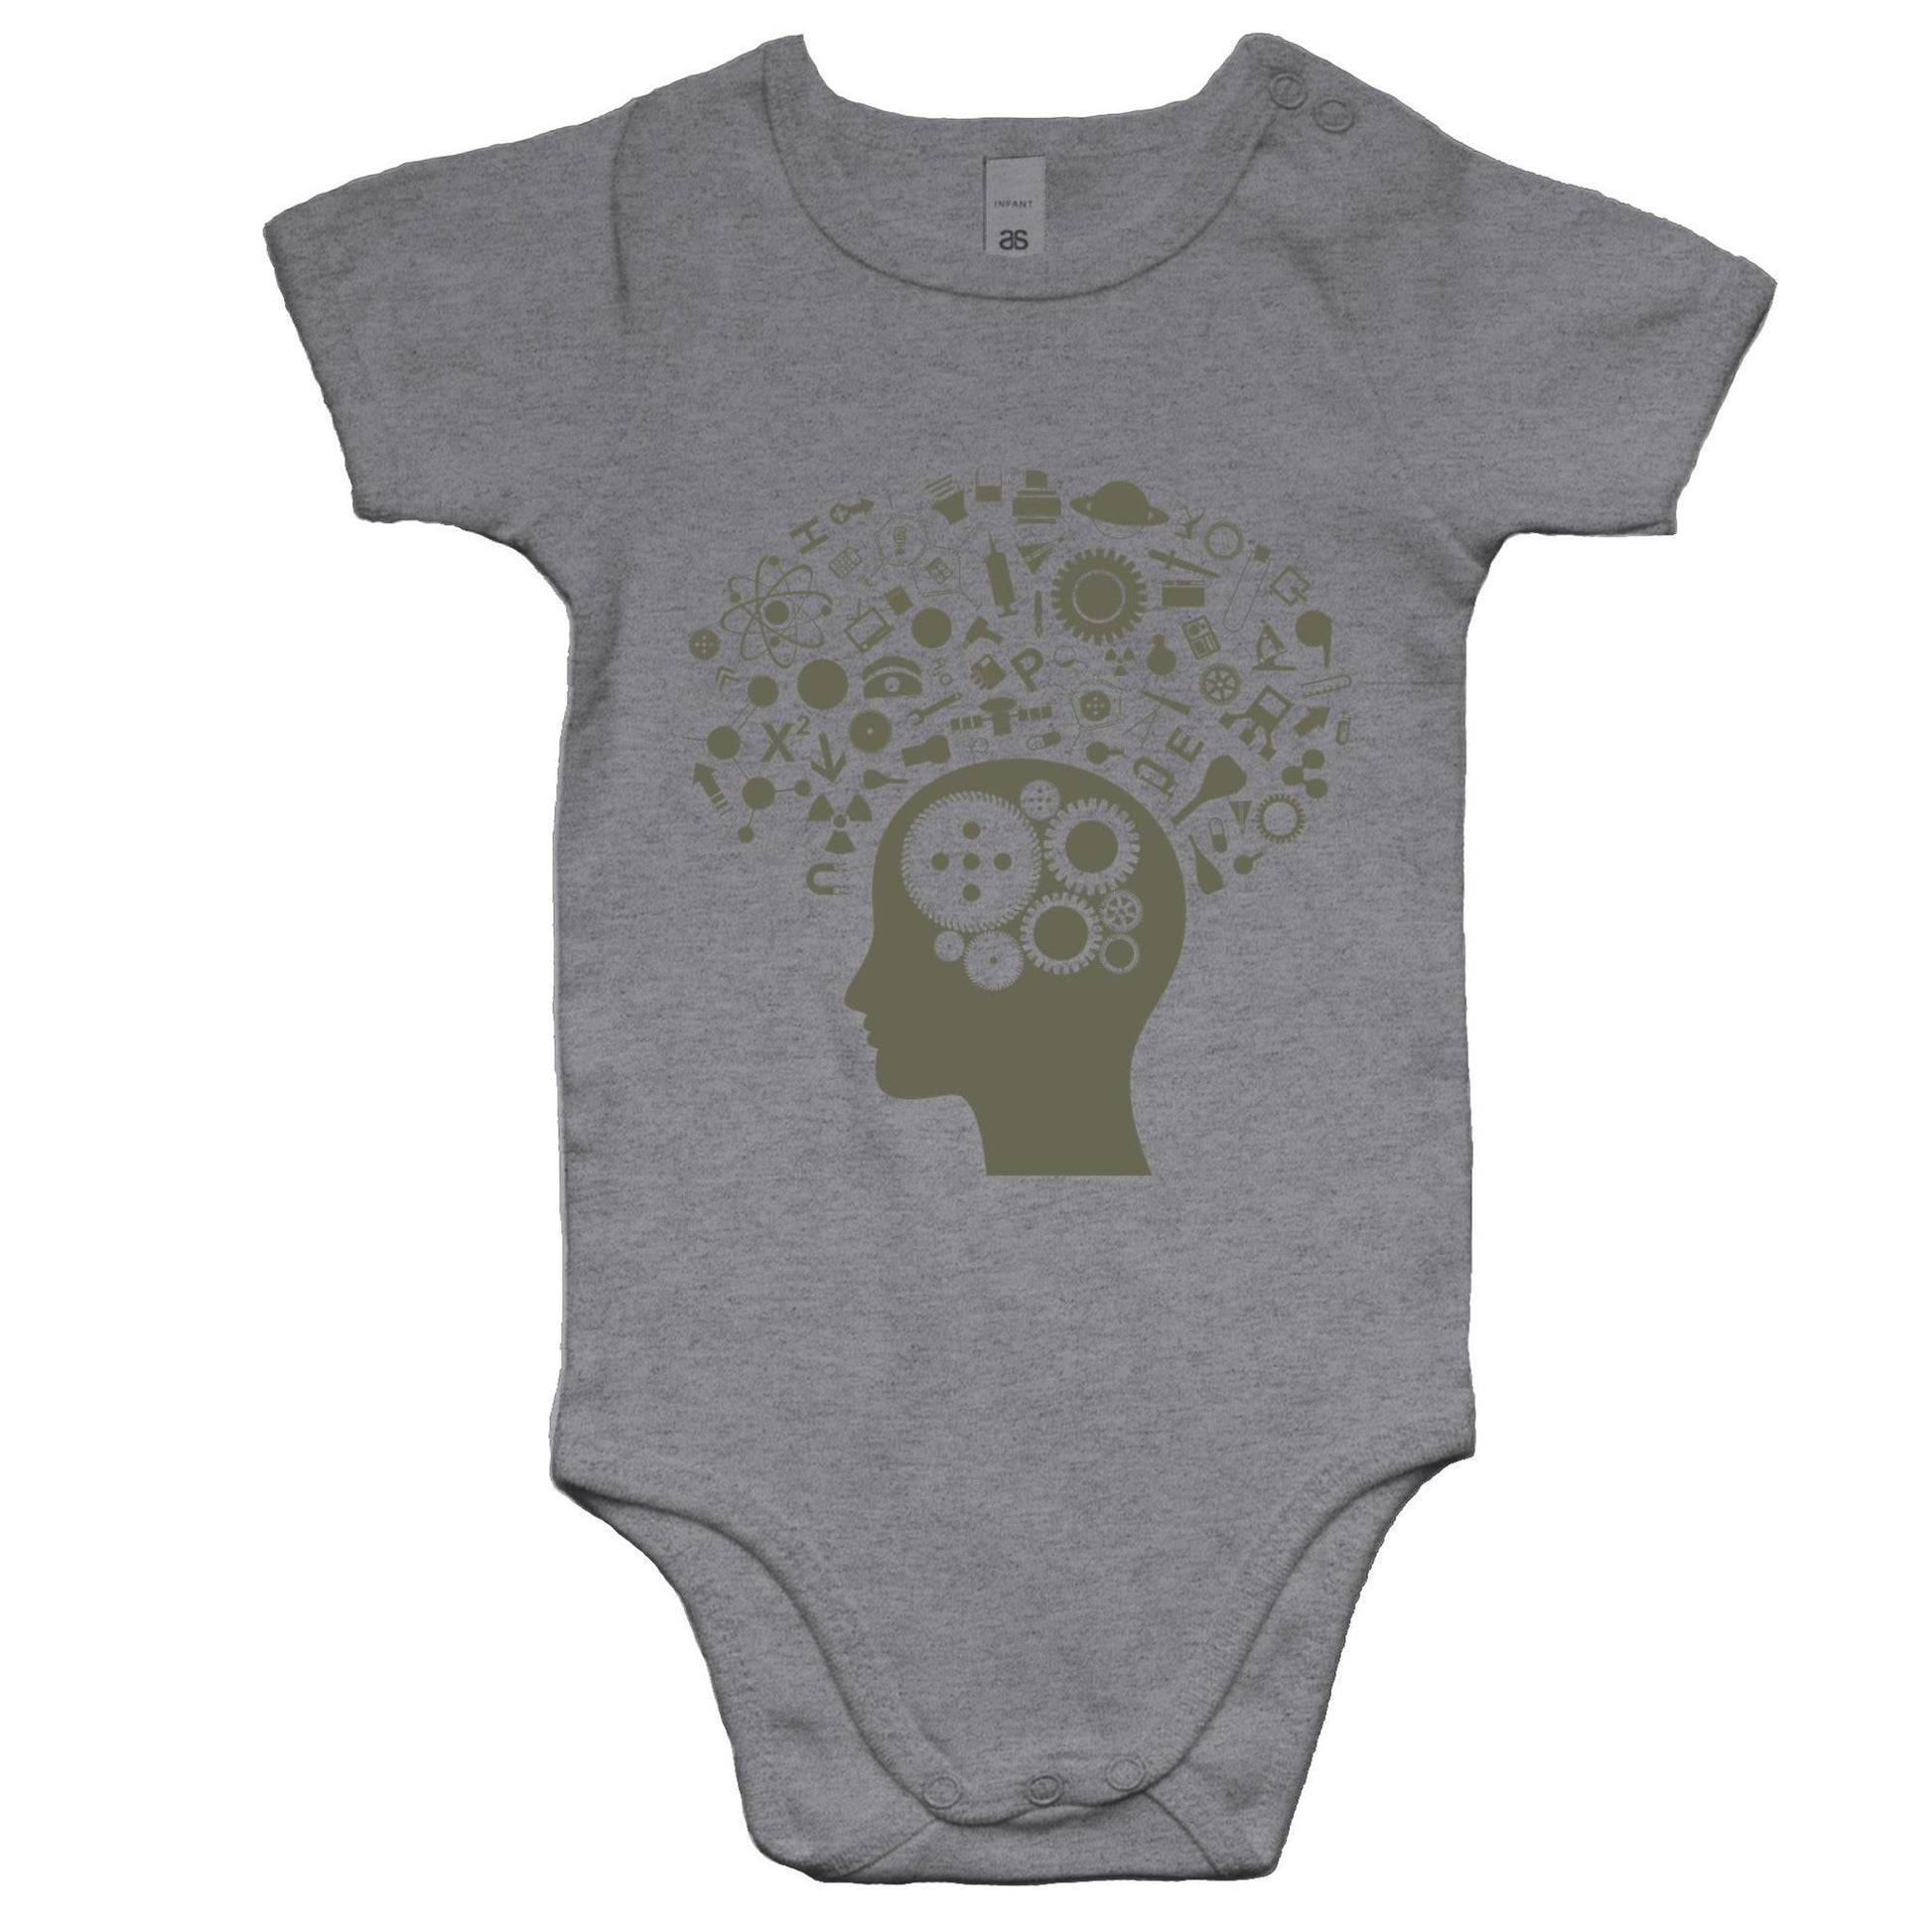 Science Brain - Baby Bodysuit Grey Marle Baby Bodysuit kids Science